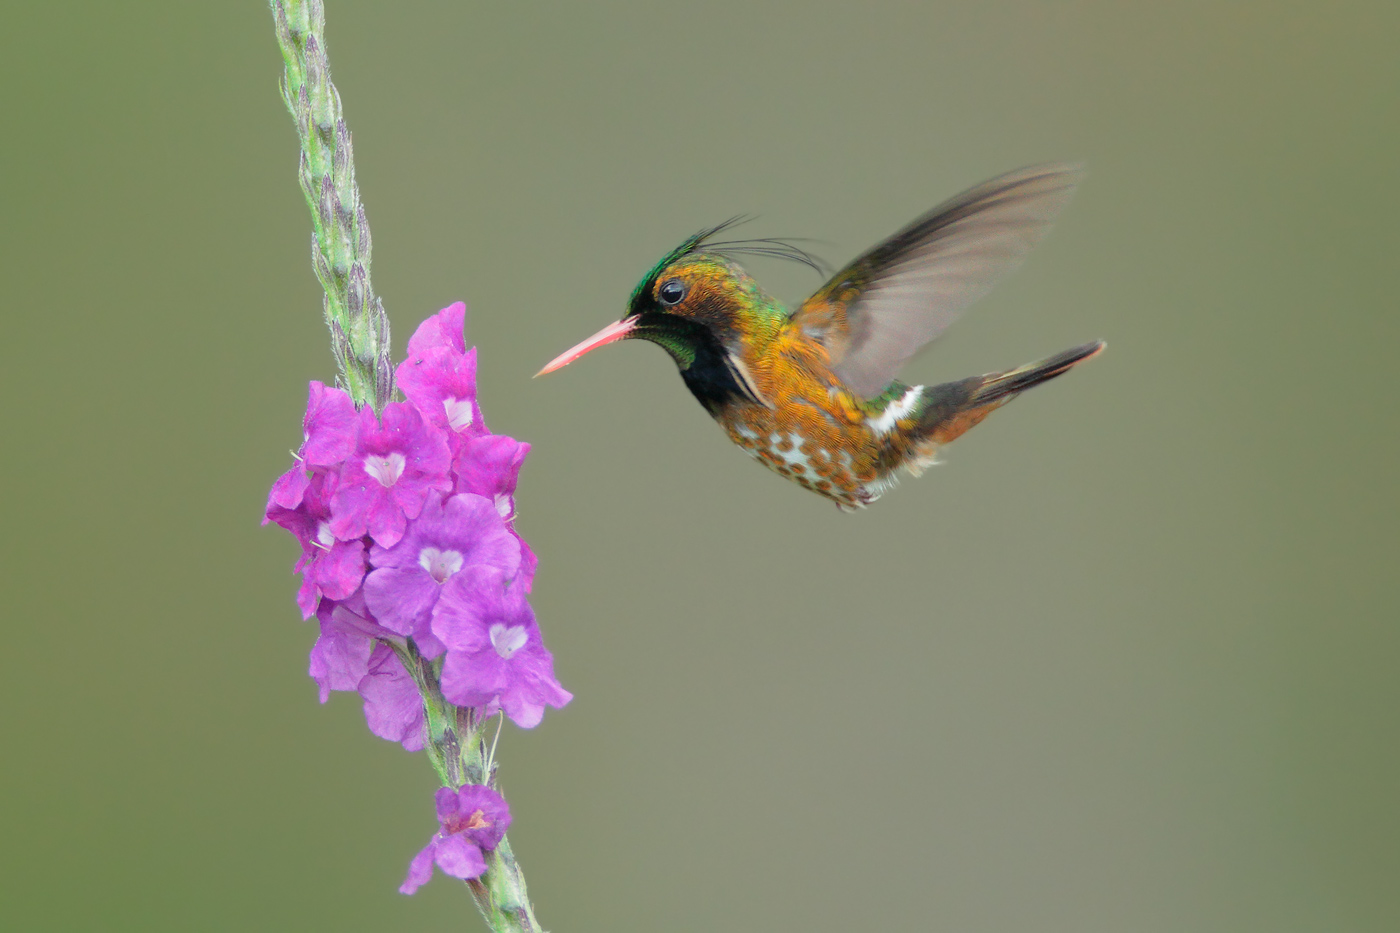 Hummingbird patosia hitam